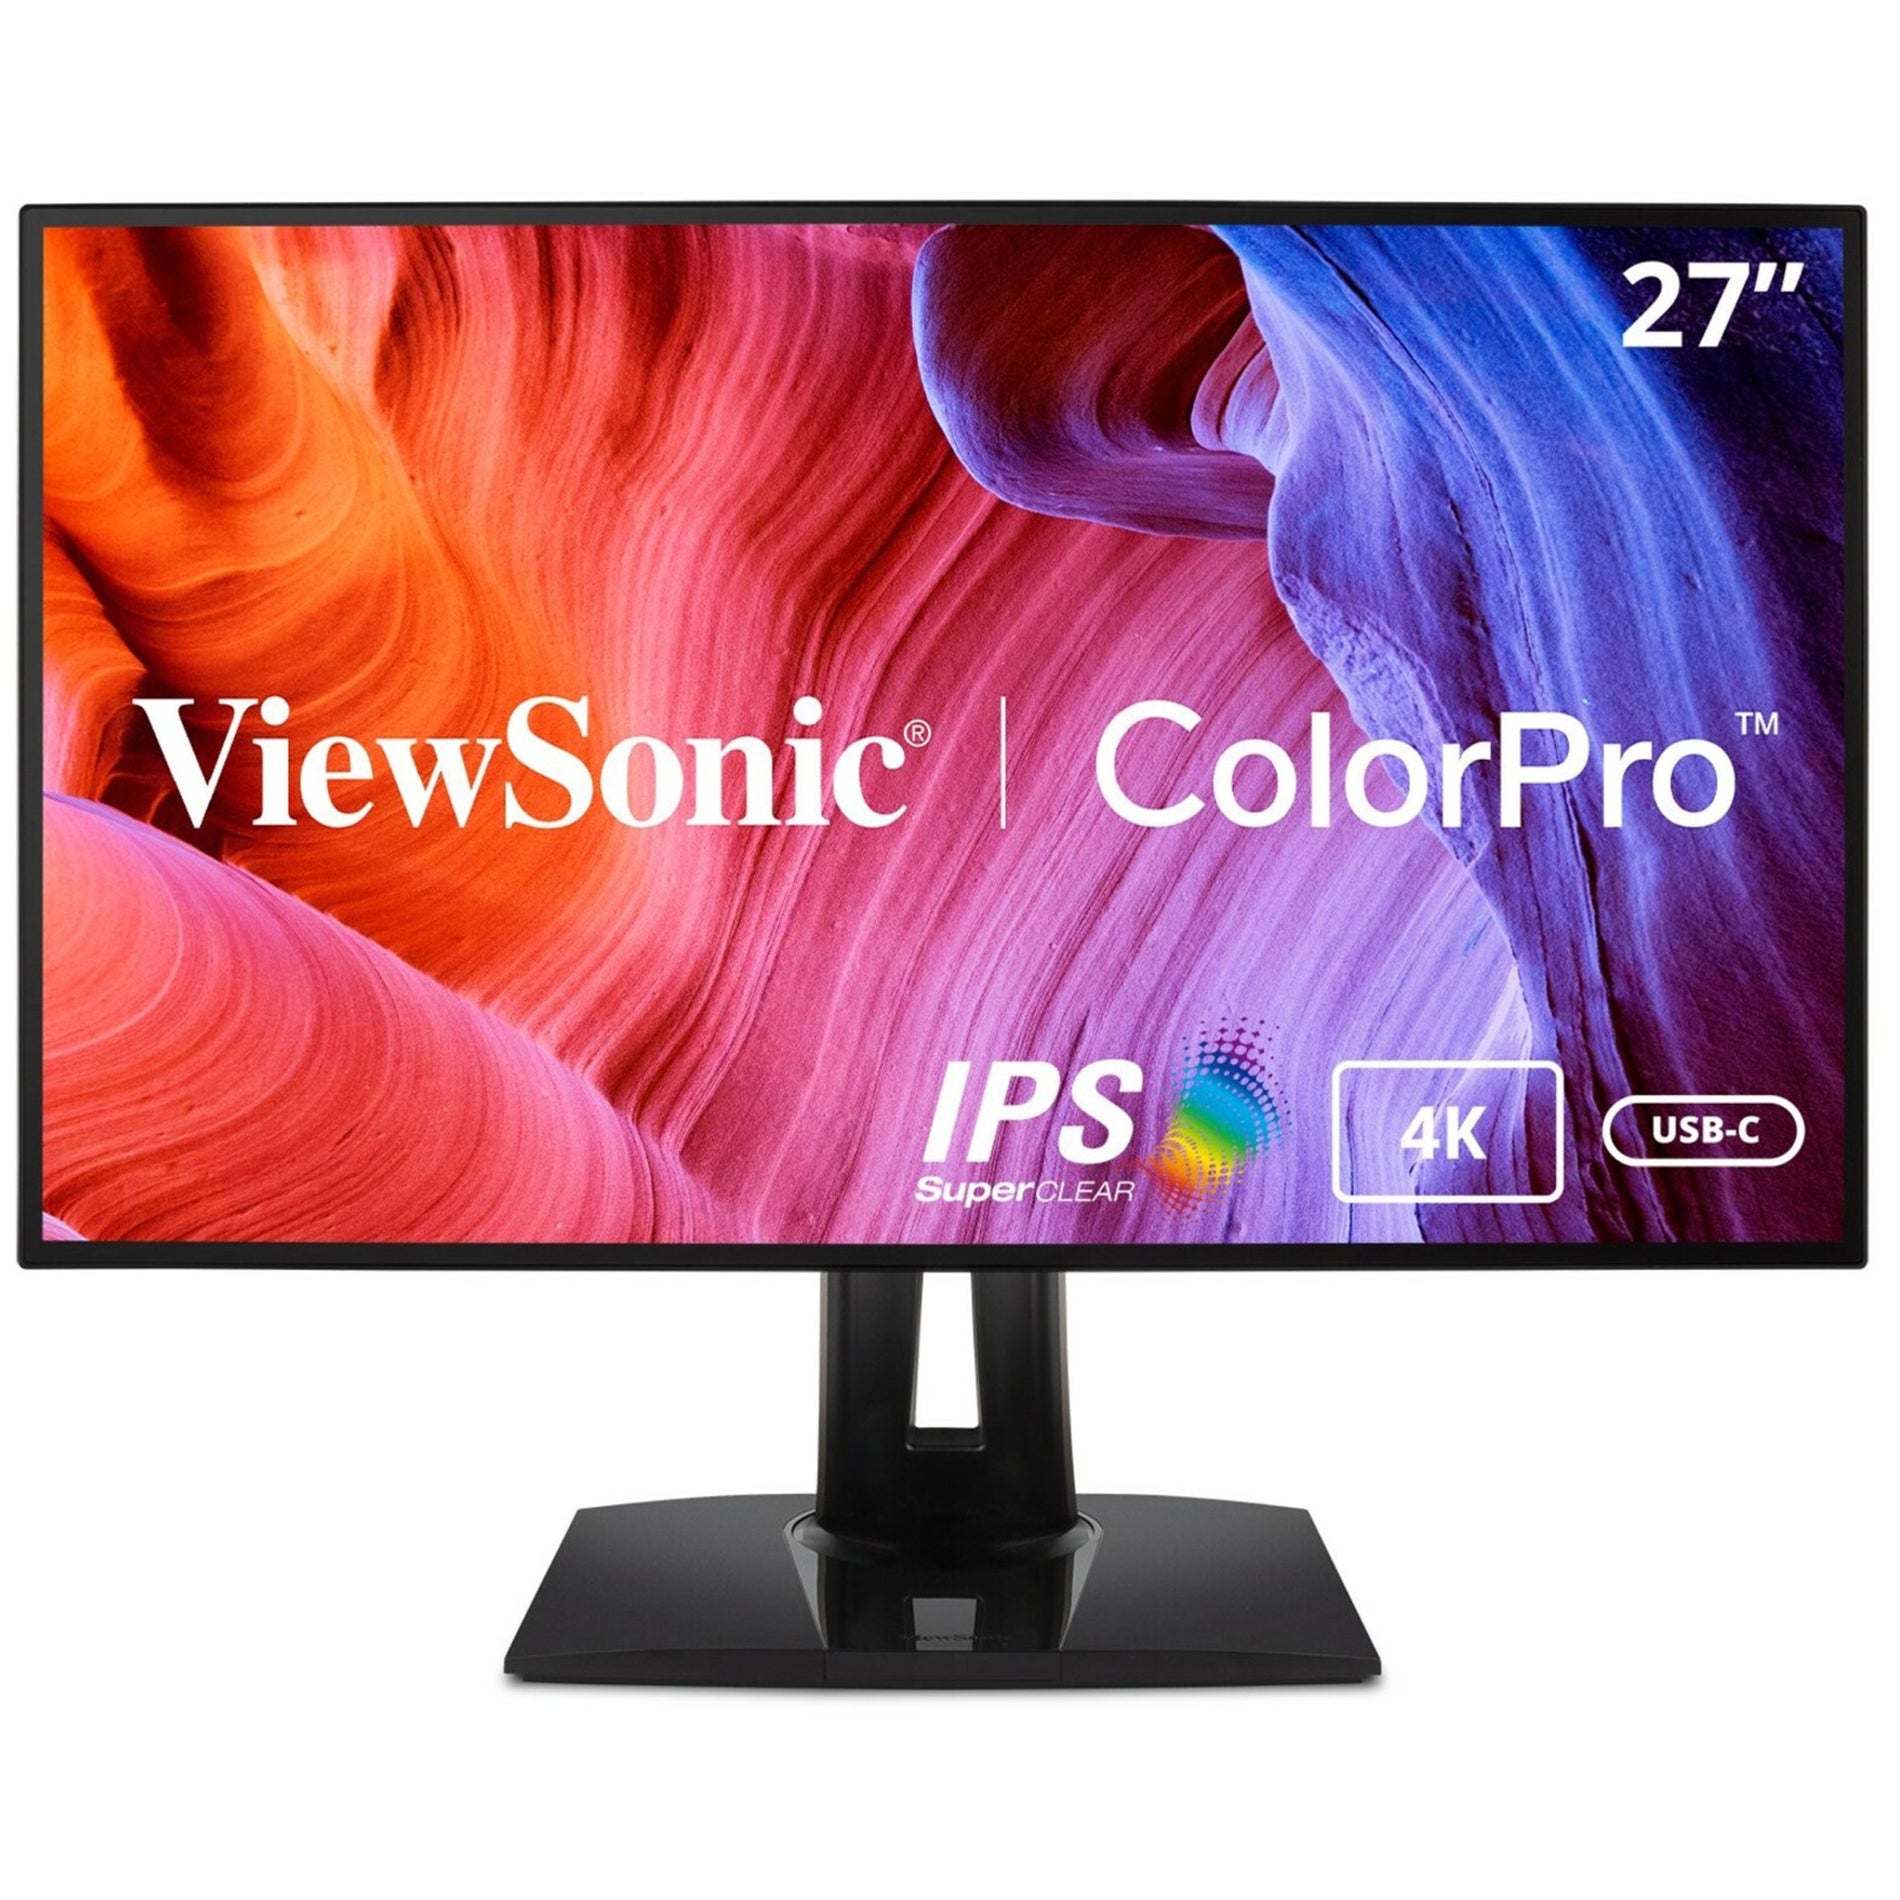 ViewSonic VP2768A-4K ColorPro 27" 4K UHD Design Monitor with USB-C, 3840 x 2160 Resolution